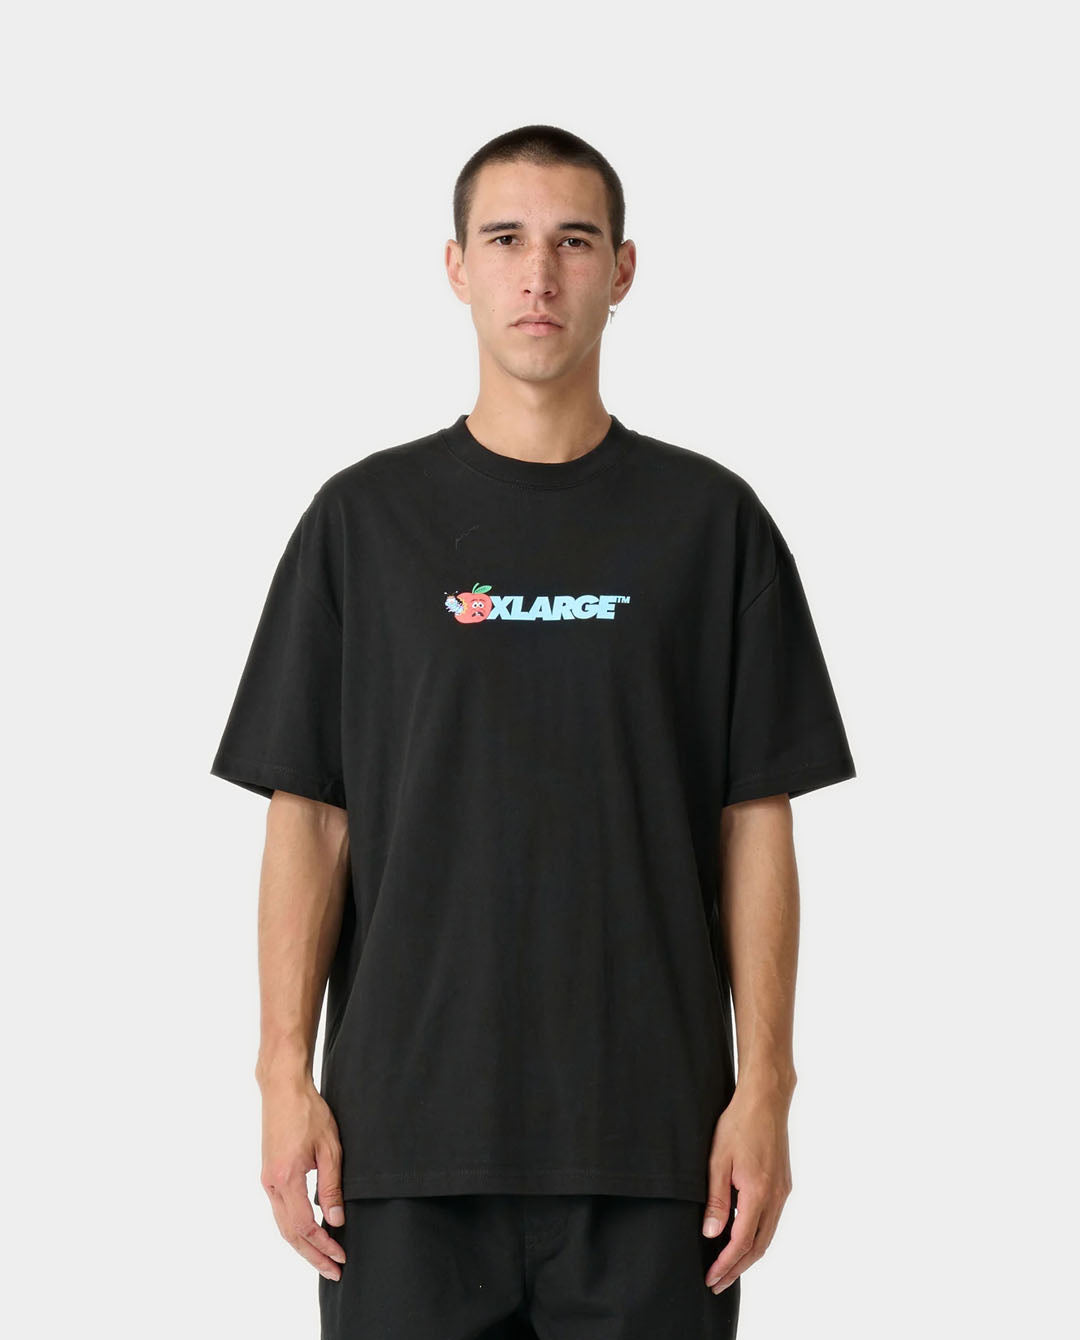 XLarge - Apples T-Shirt - Black